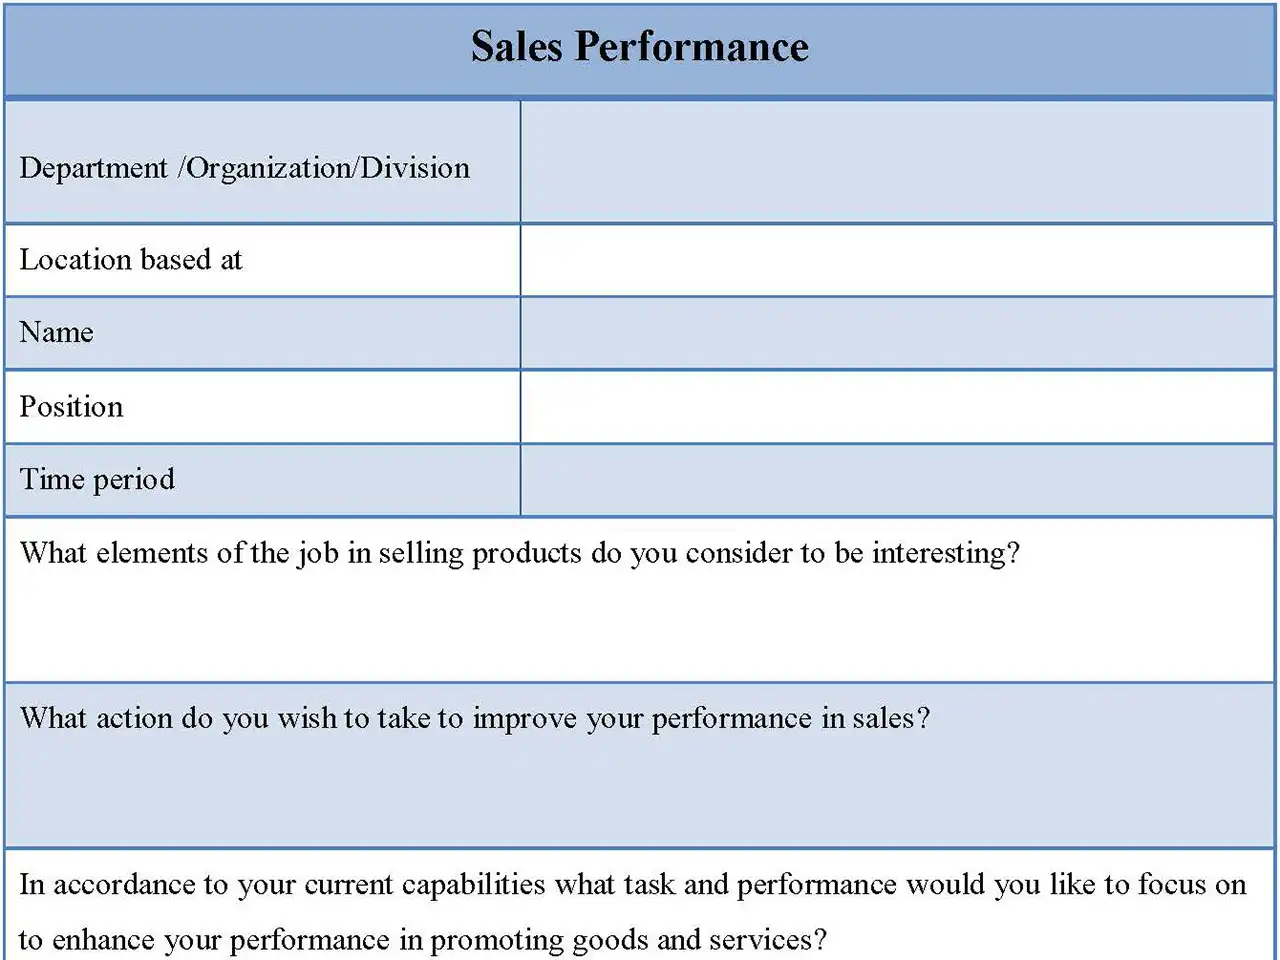 Sales Performance Form